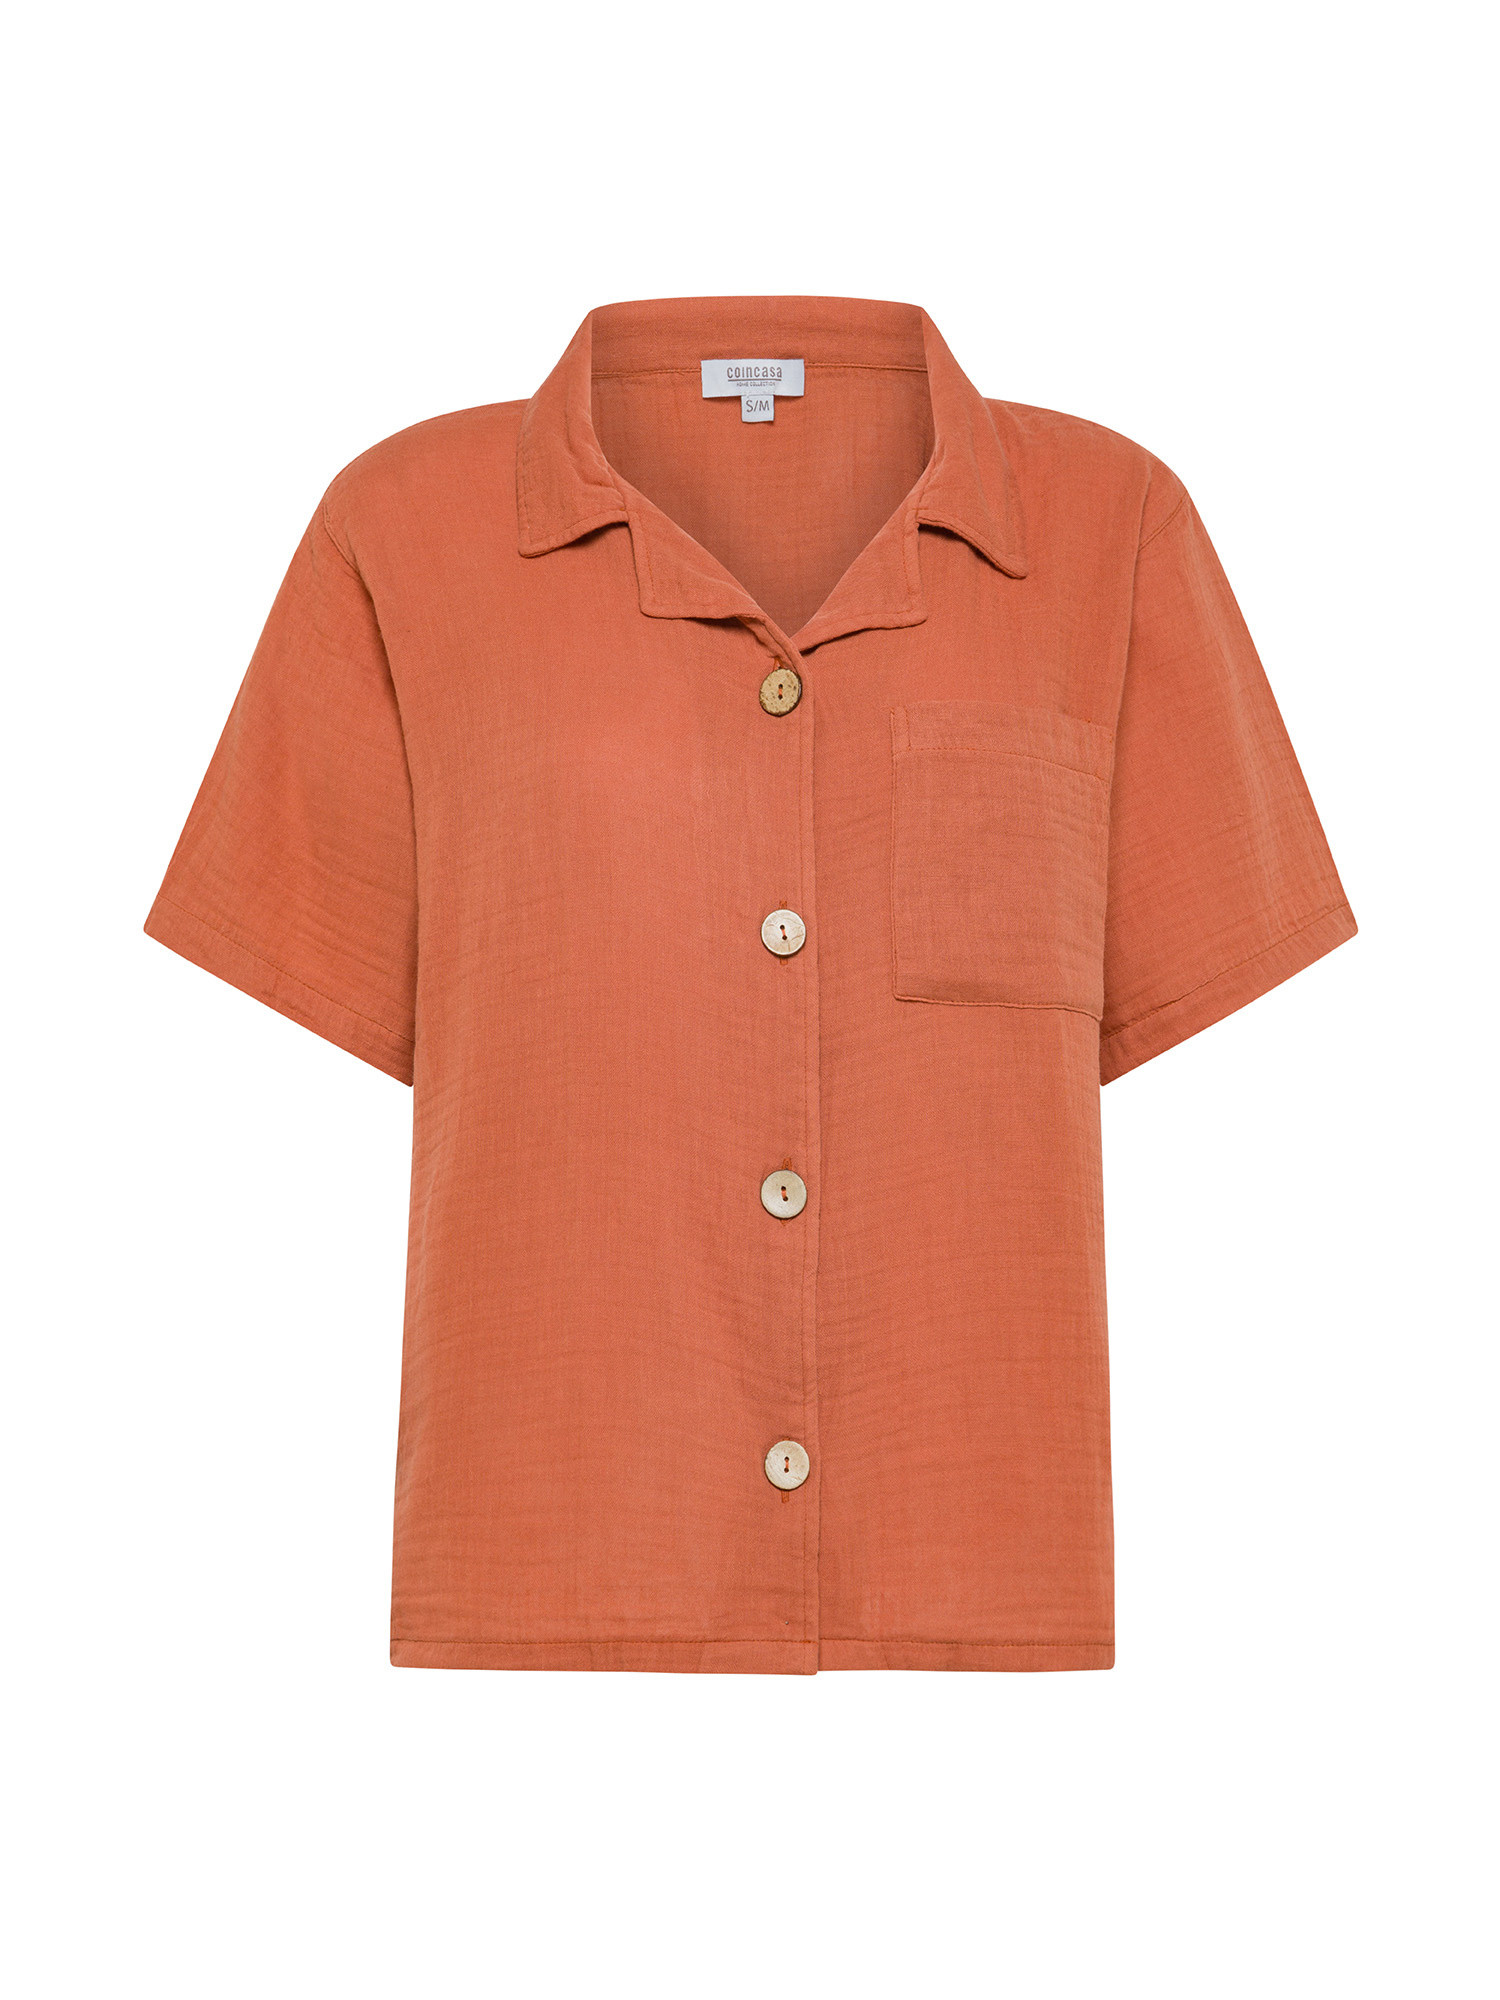 Camicia in mussola di cotone mezza manica., Arancione ambra, large image number 0